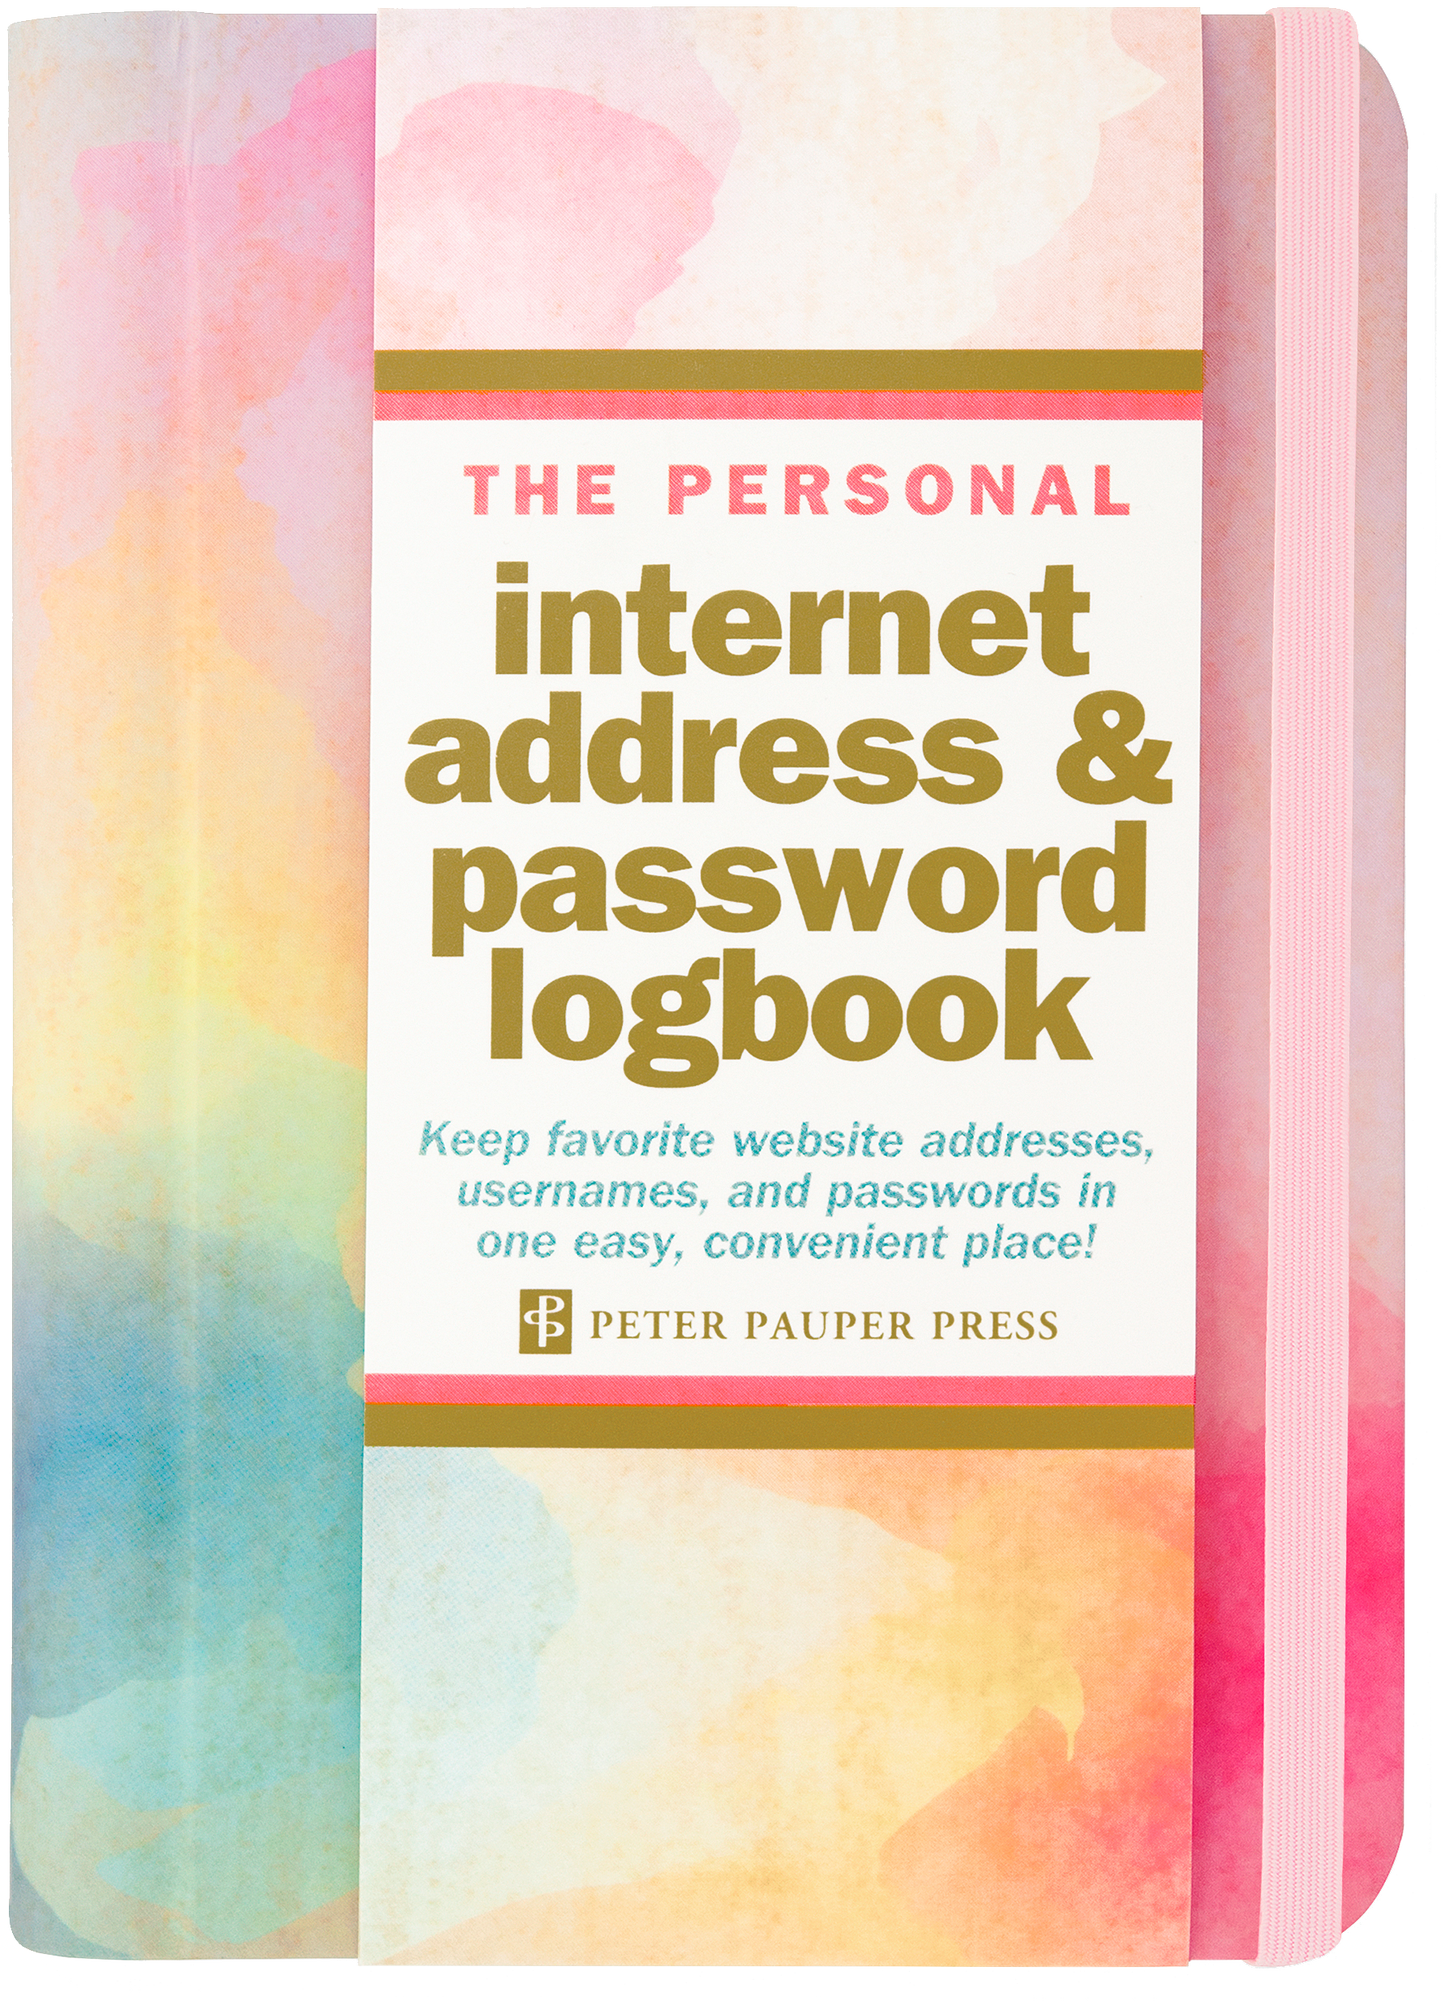 Watercolor Sunset Internet Address & Password Logbook